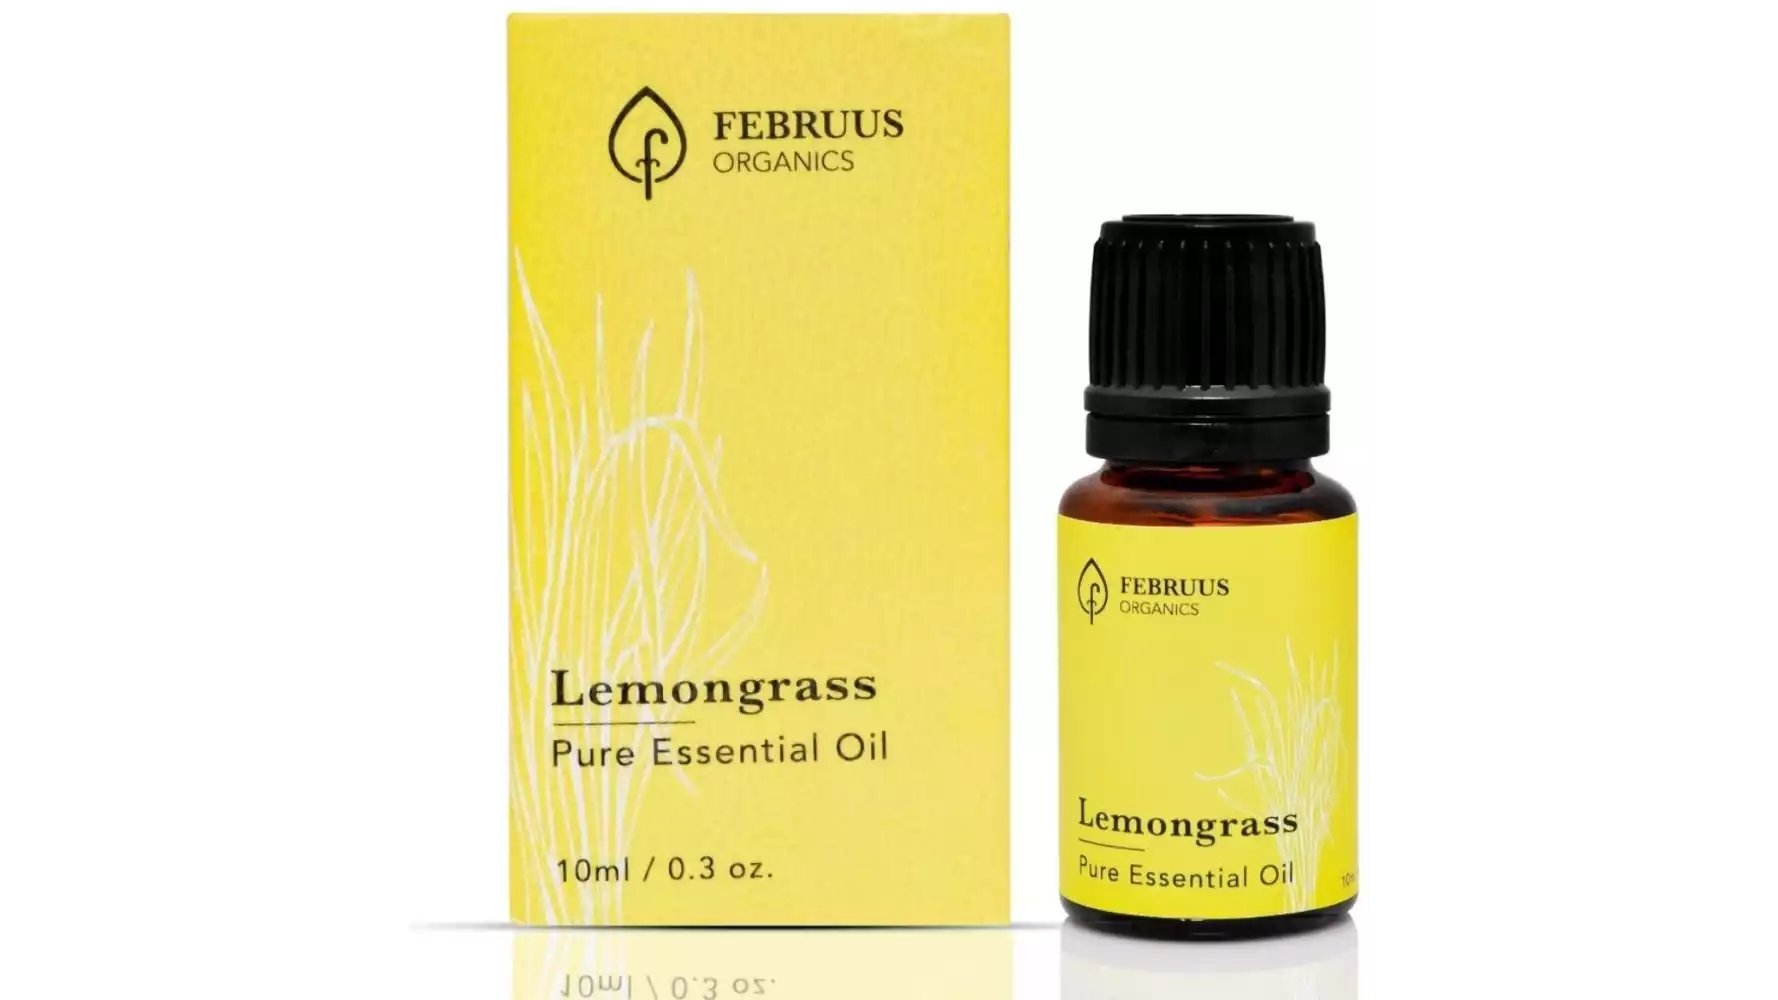 Februus Organics Lemongrass Essential Oil (10ml)